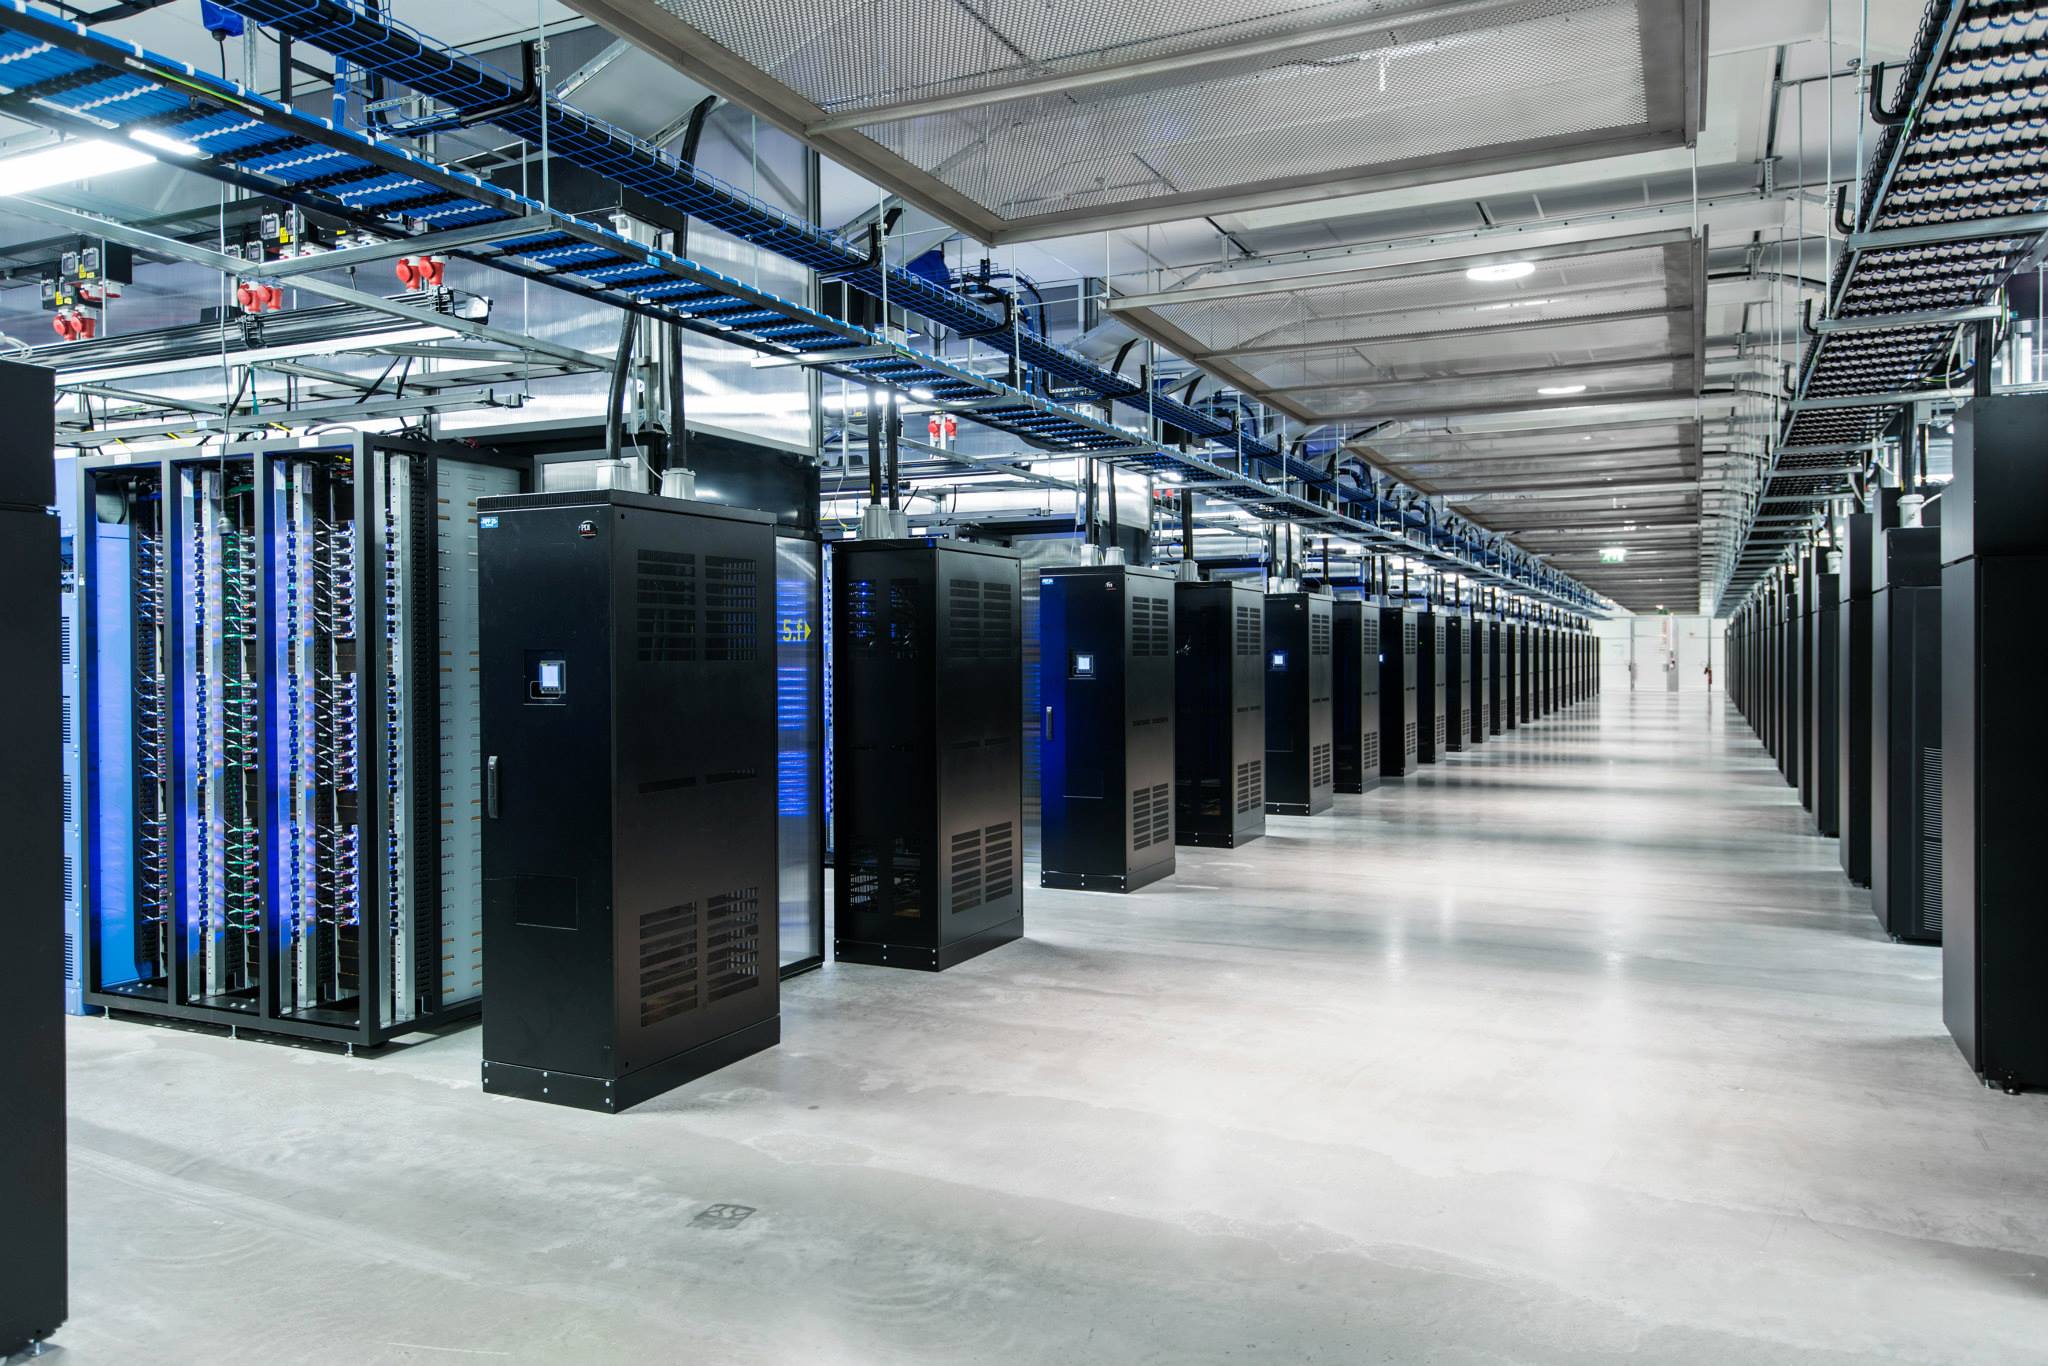 Facebook Data Center, Lule, Sweden